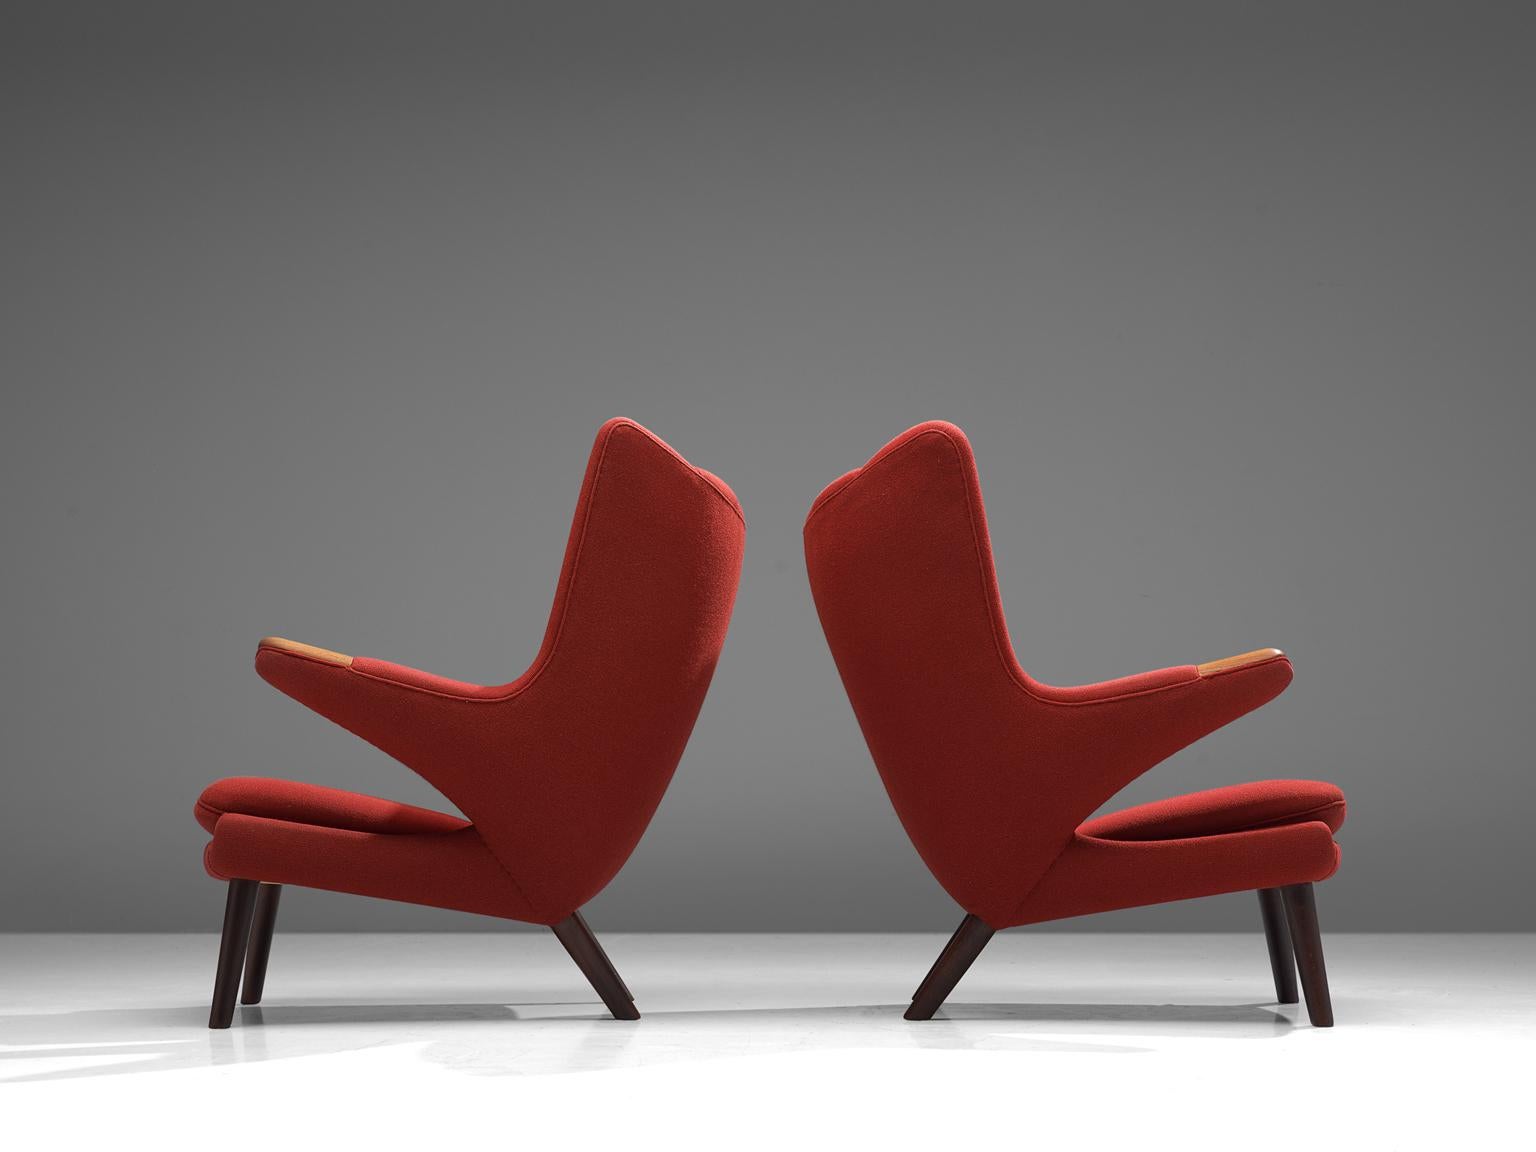 Hans Wegner Pair of Papa Bears Lounge Chairs in Original Red Upholstery (Dänisch)